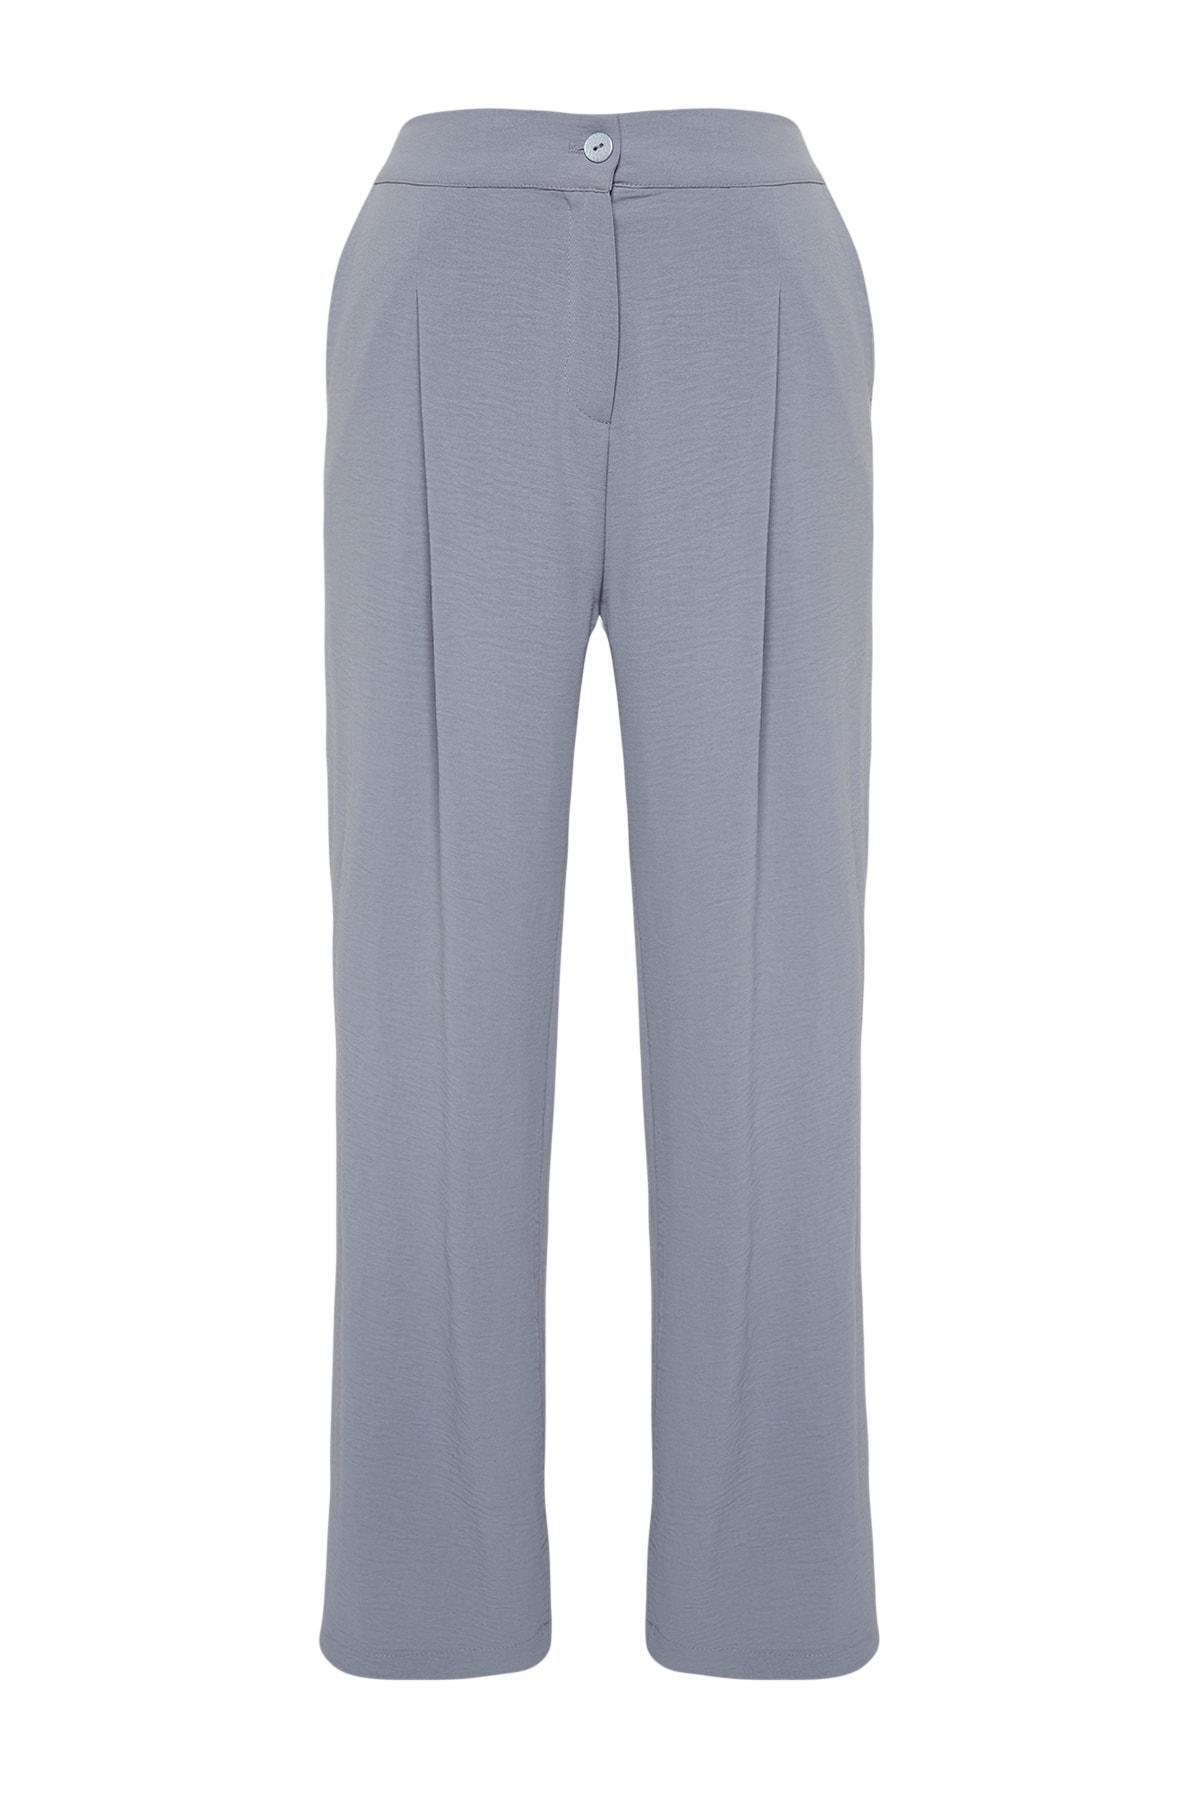 Trendyol - Grey Loose Plus Size Pants